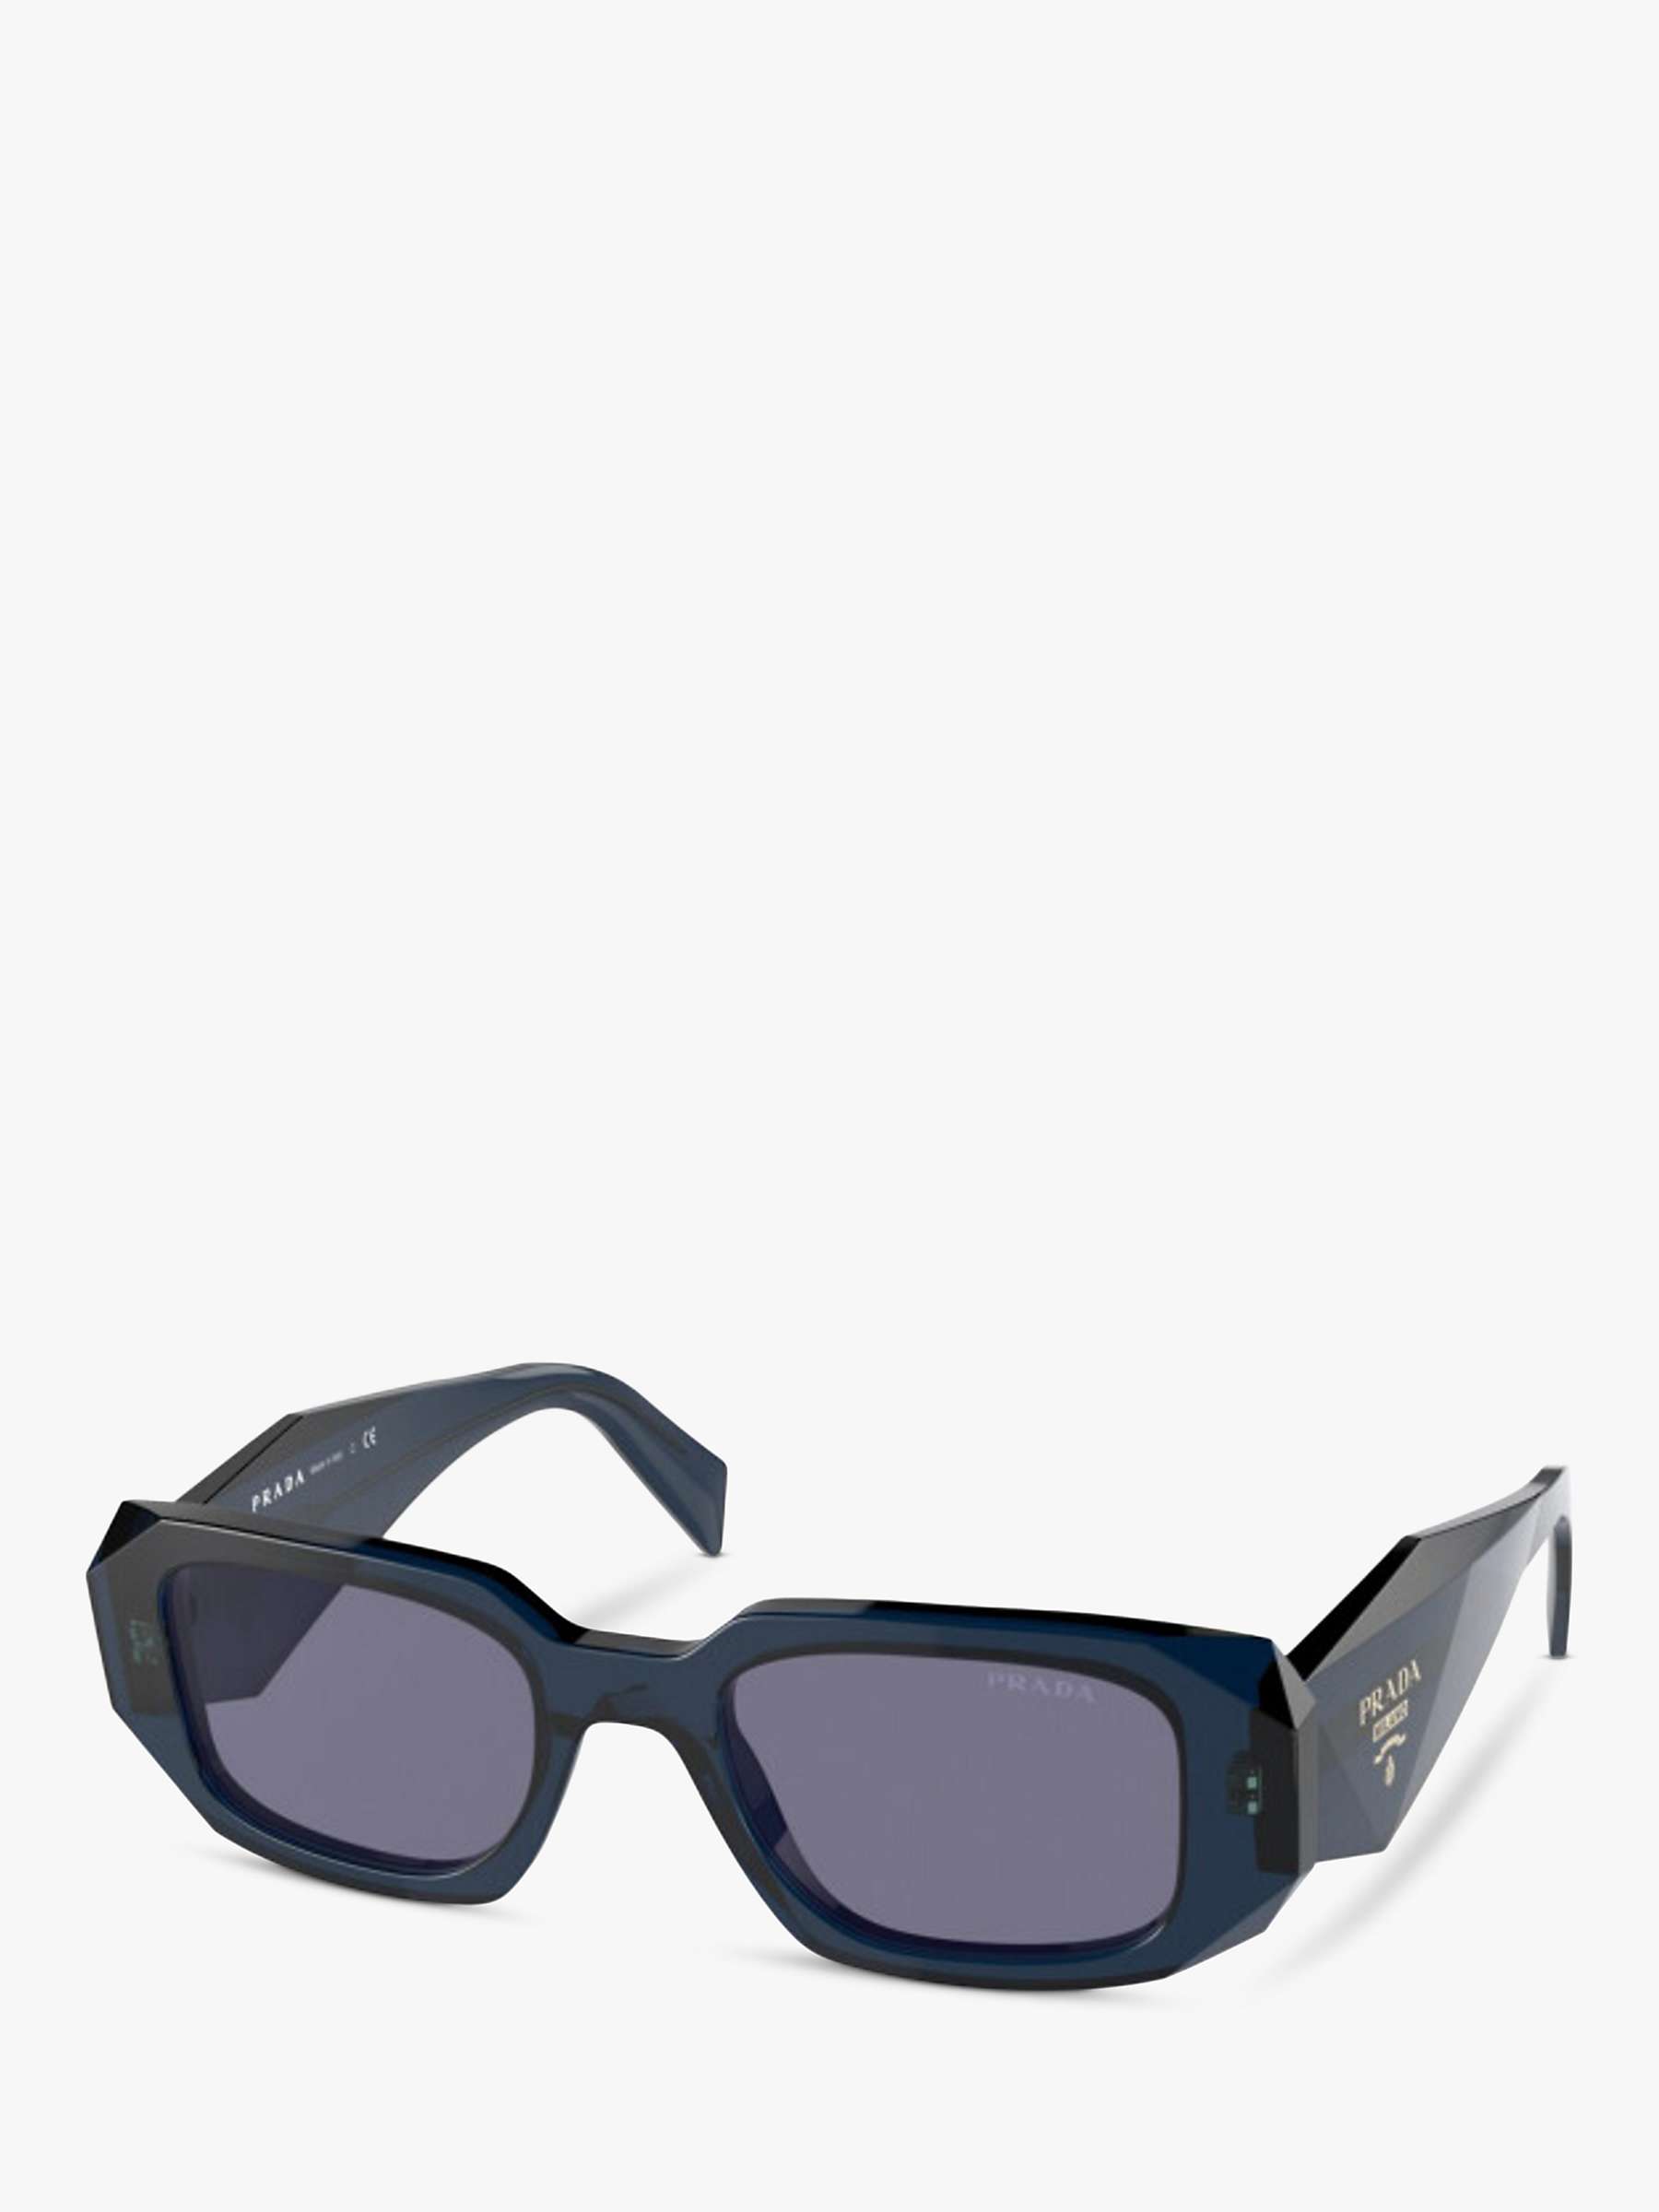 Prada PR 17WS Women's Rectangular Sunglasses, Blue Crystal/Blue at John